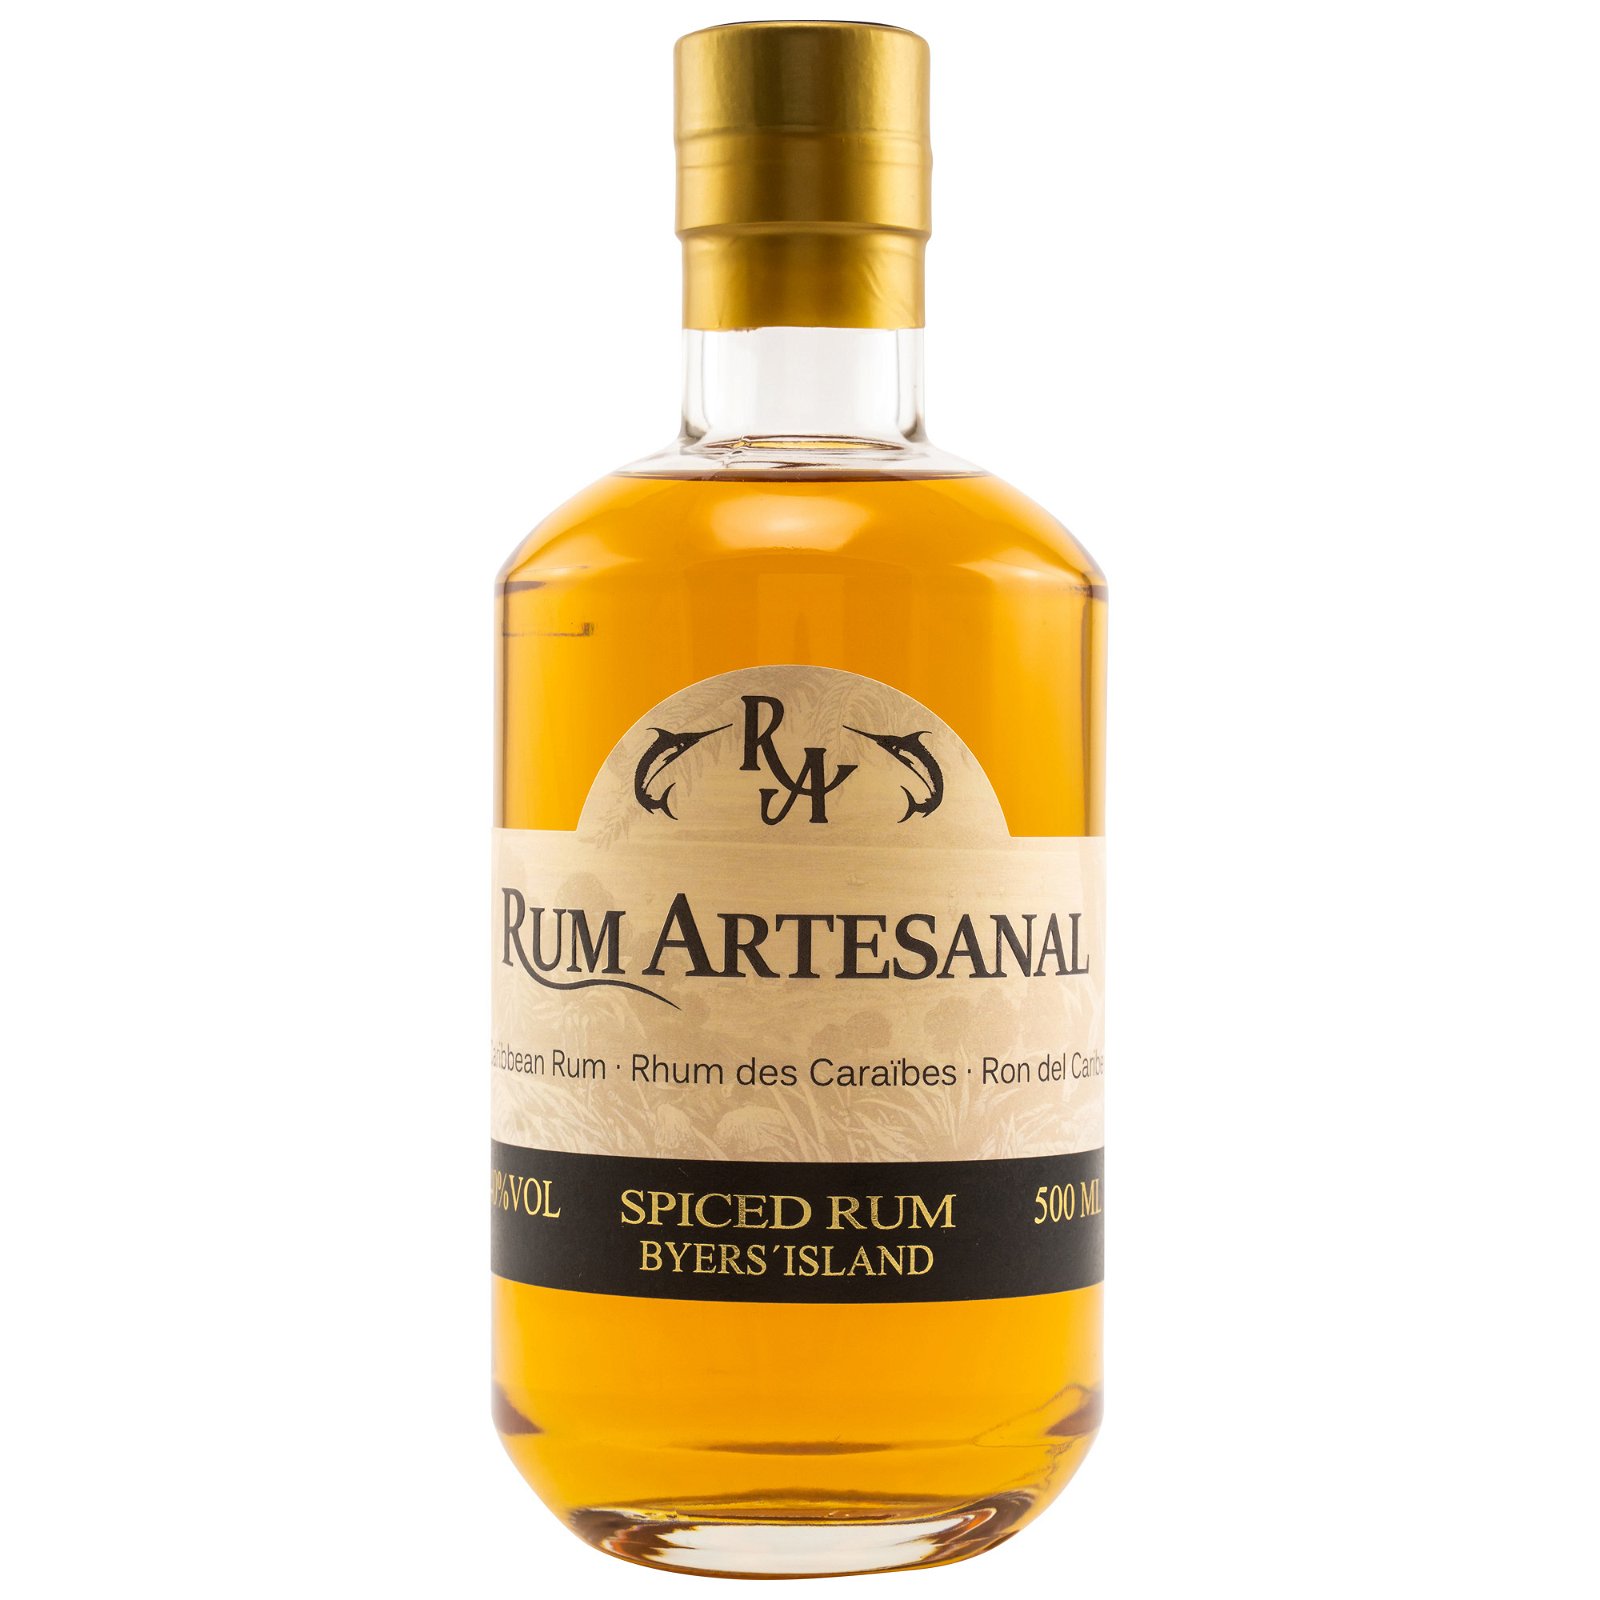 Spiced Rum Byers Island (Rum Artesanal)